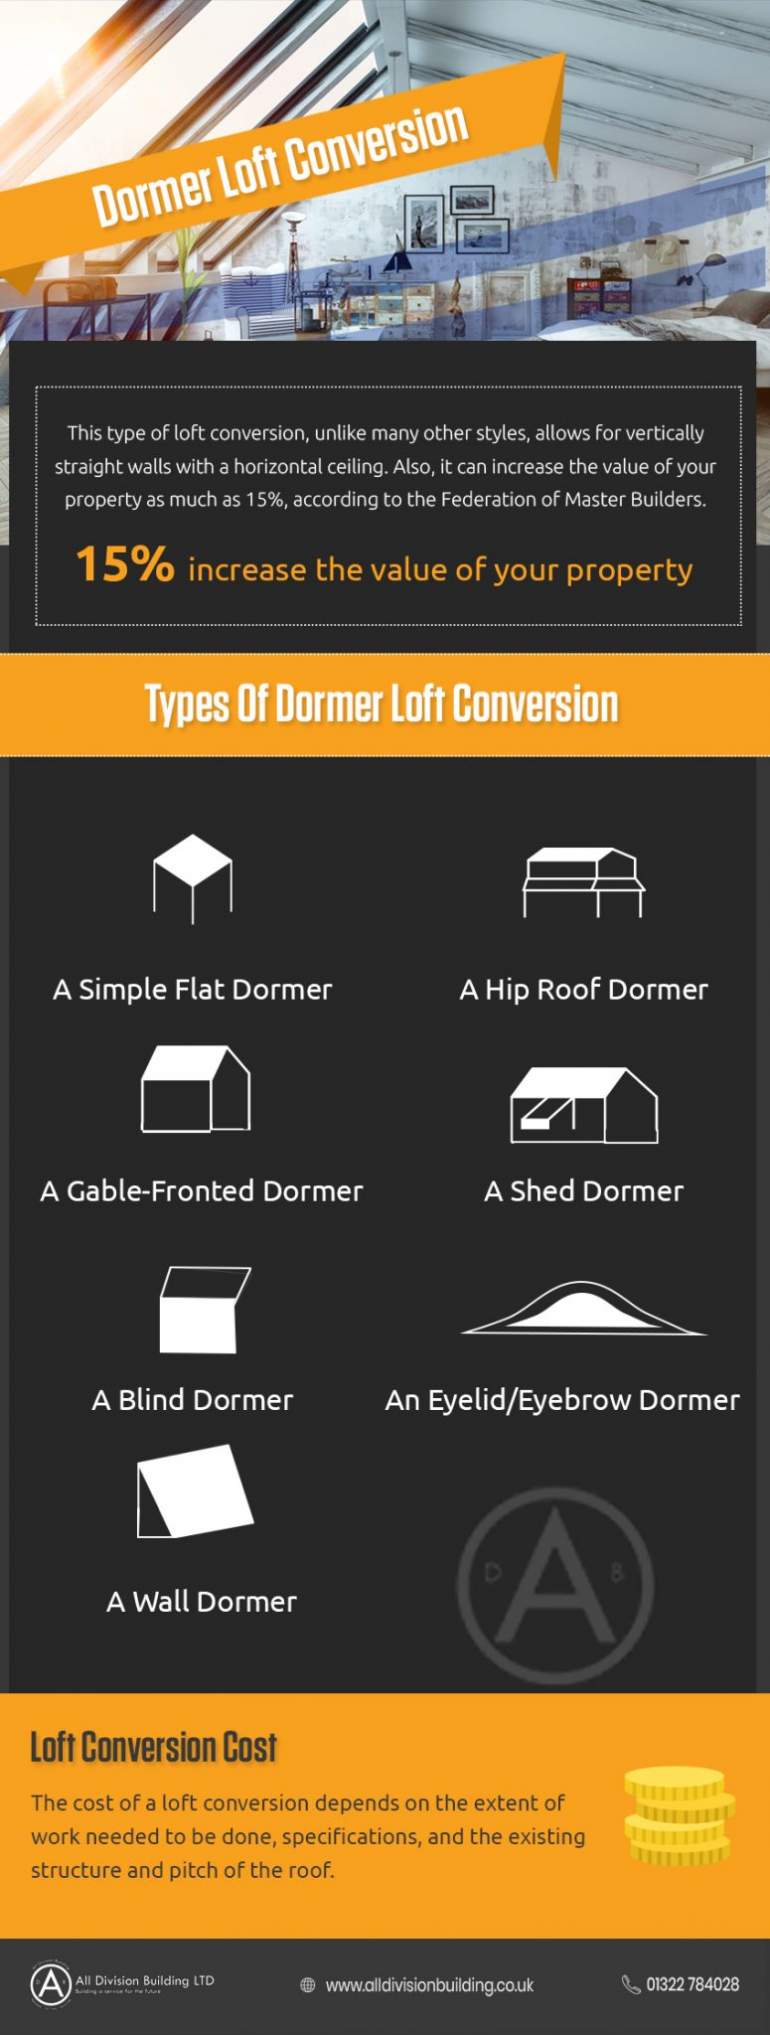 Dormer Loft Conversion